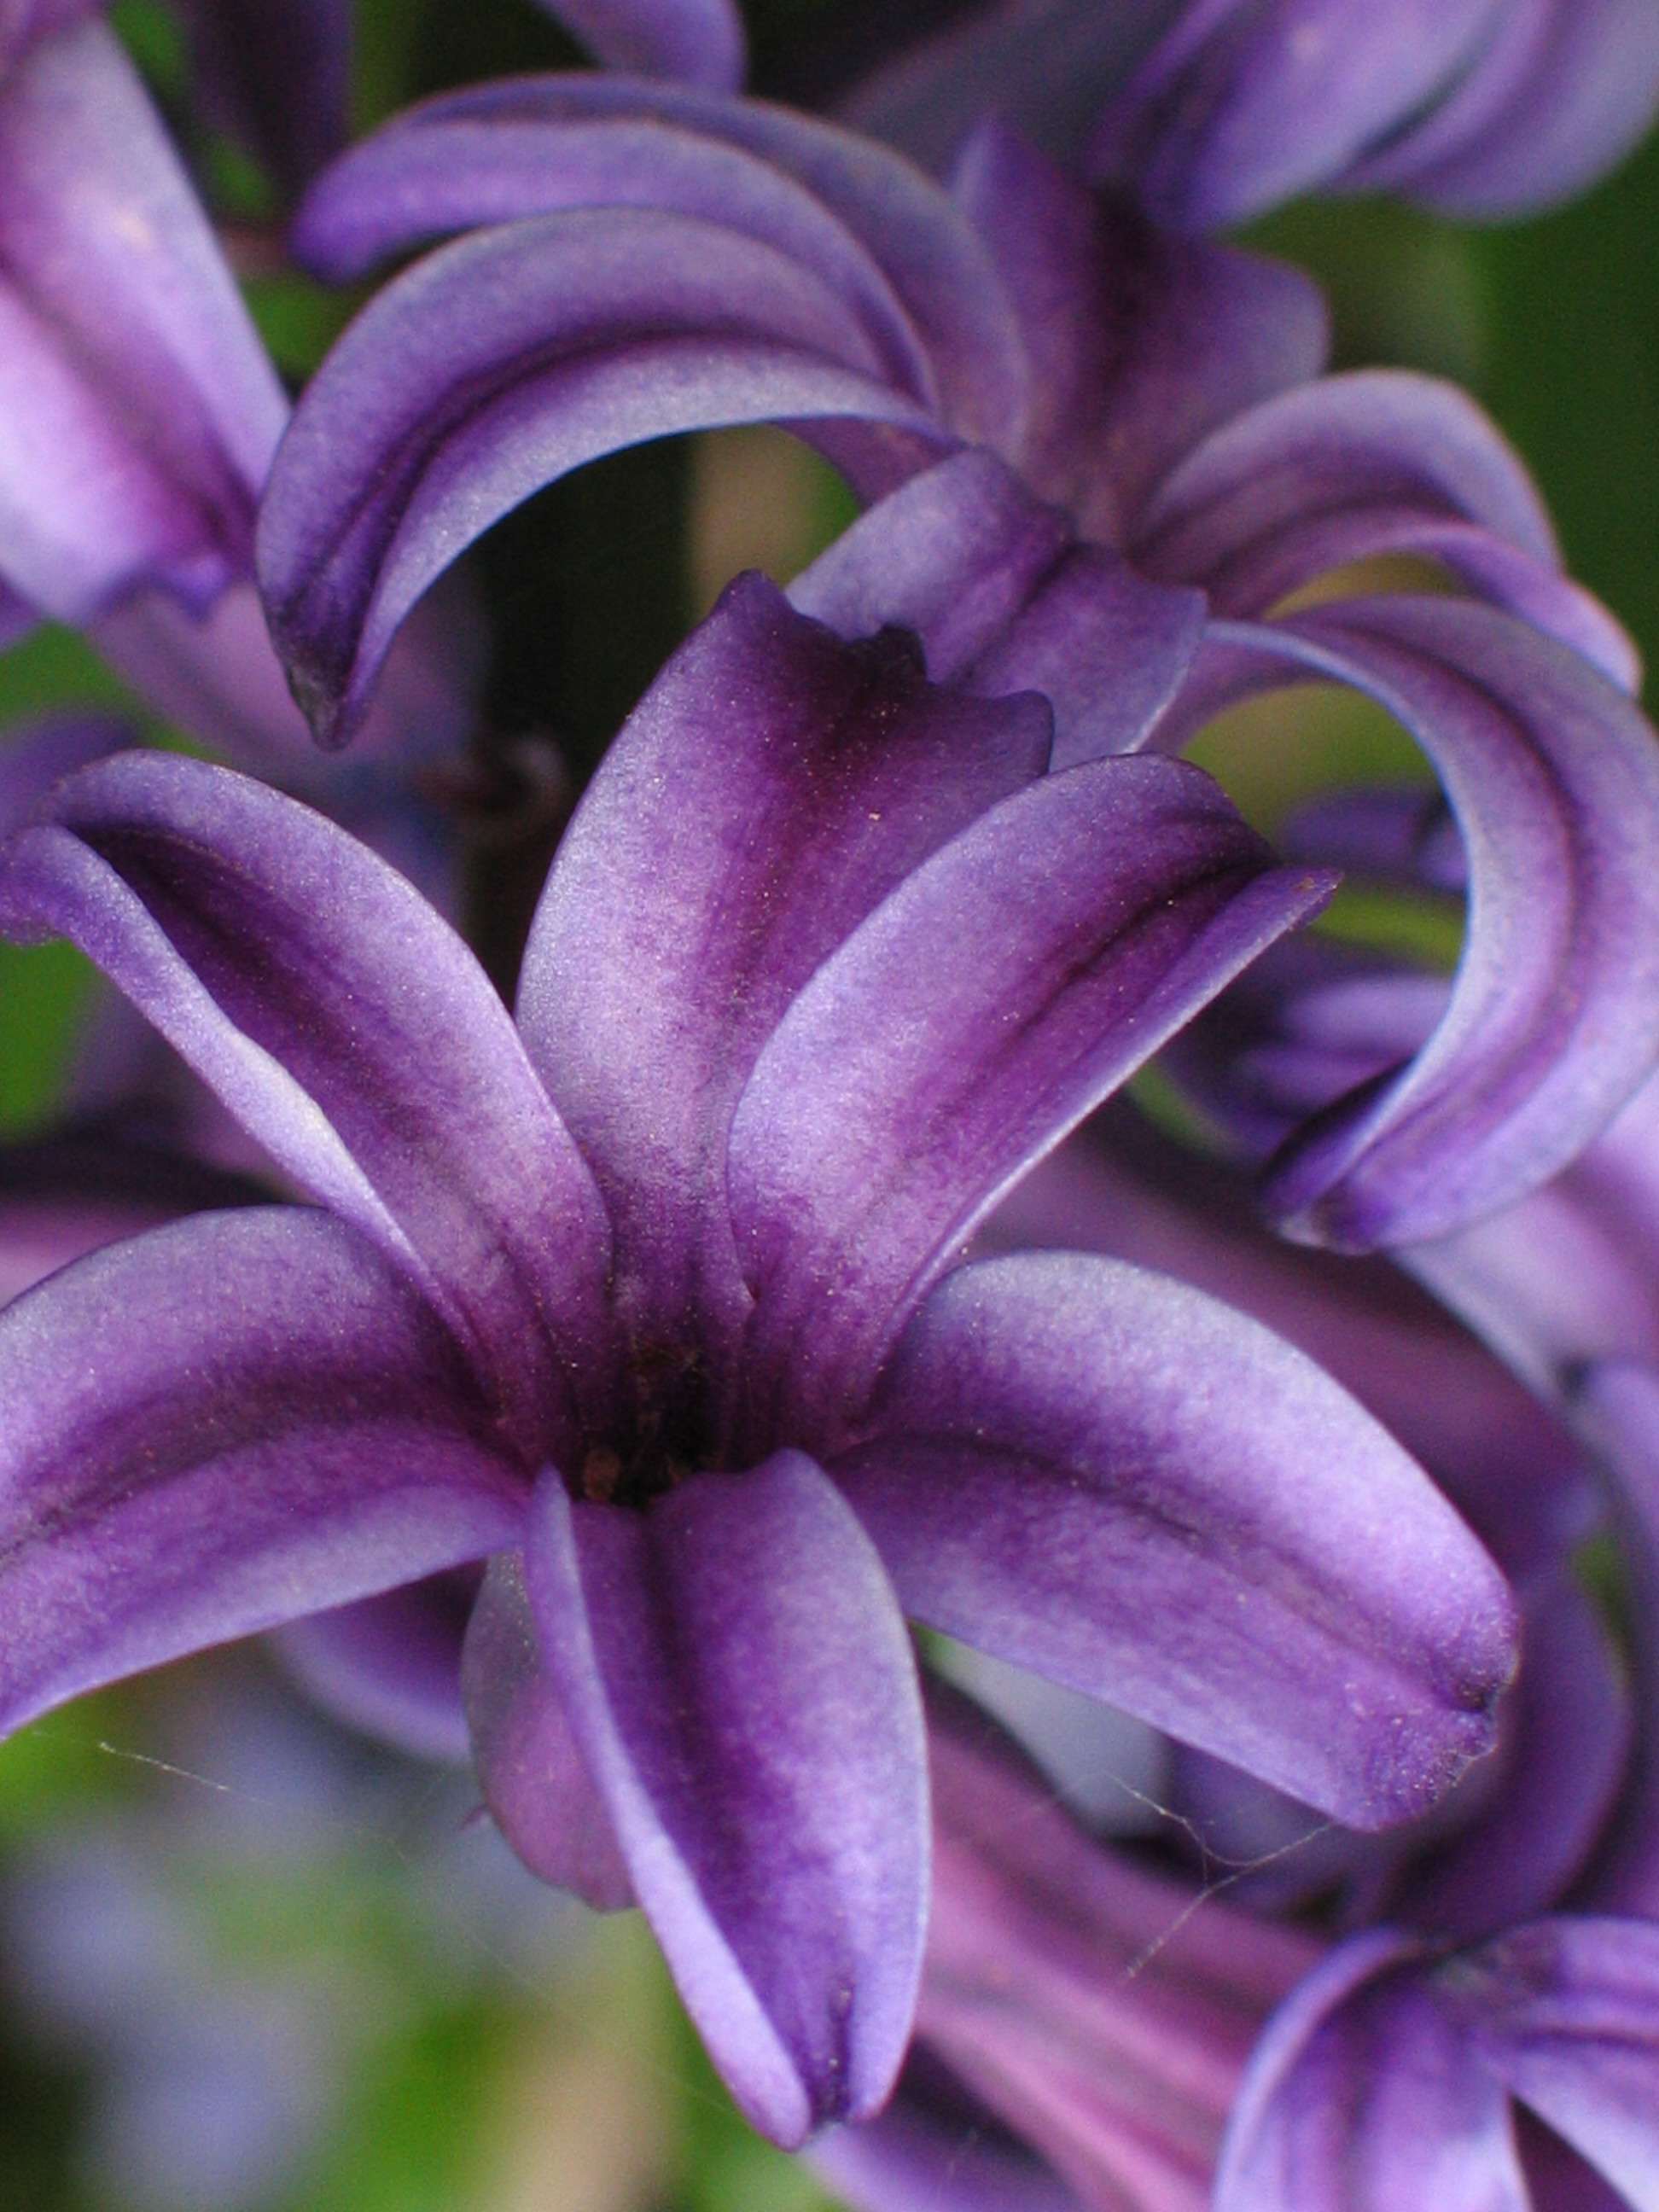 Close up of purple flowers with a slight cobweb